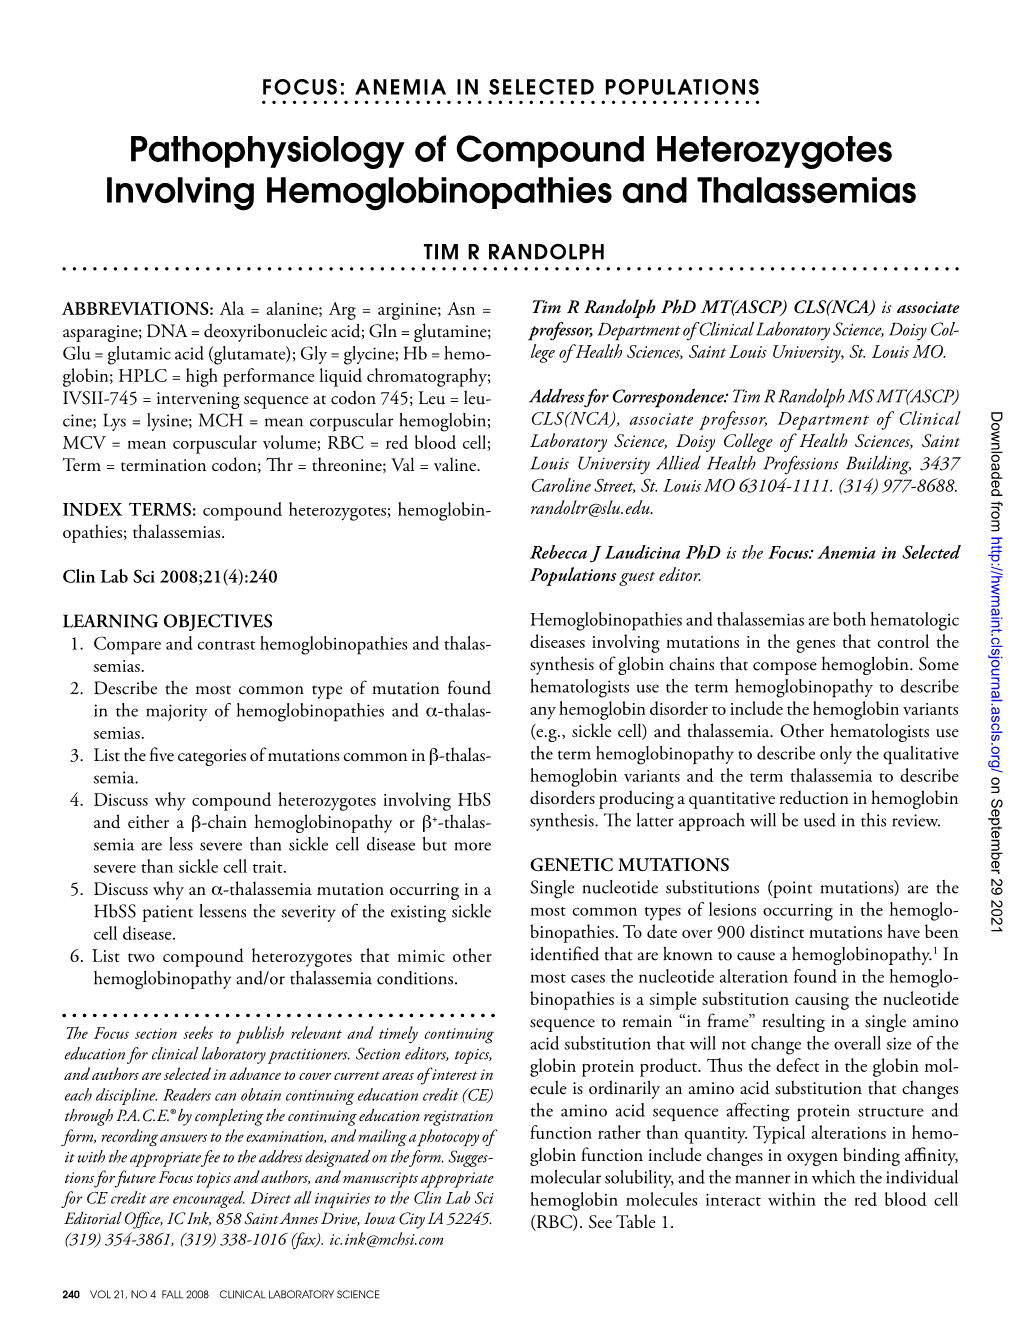 Pathophysiology of Compound Heterozygotes Involving Hemoglobinopathies and Thalassemias